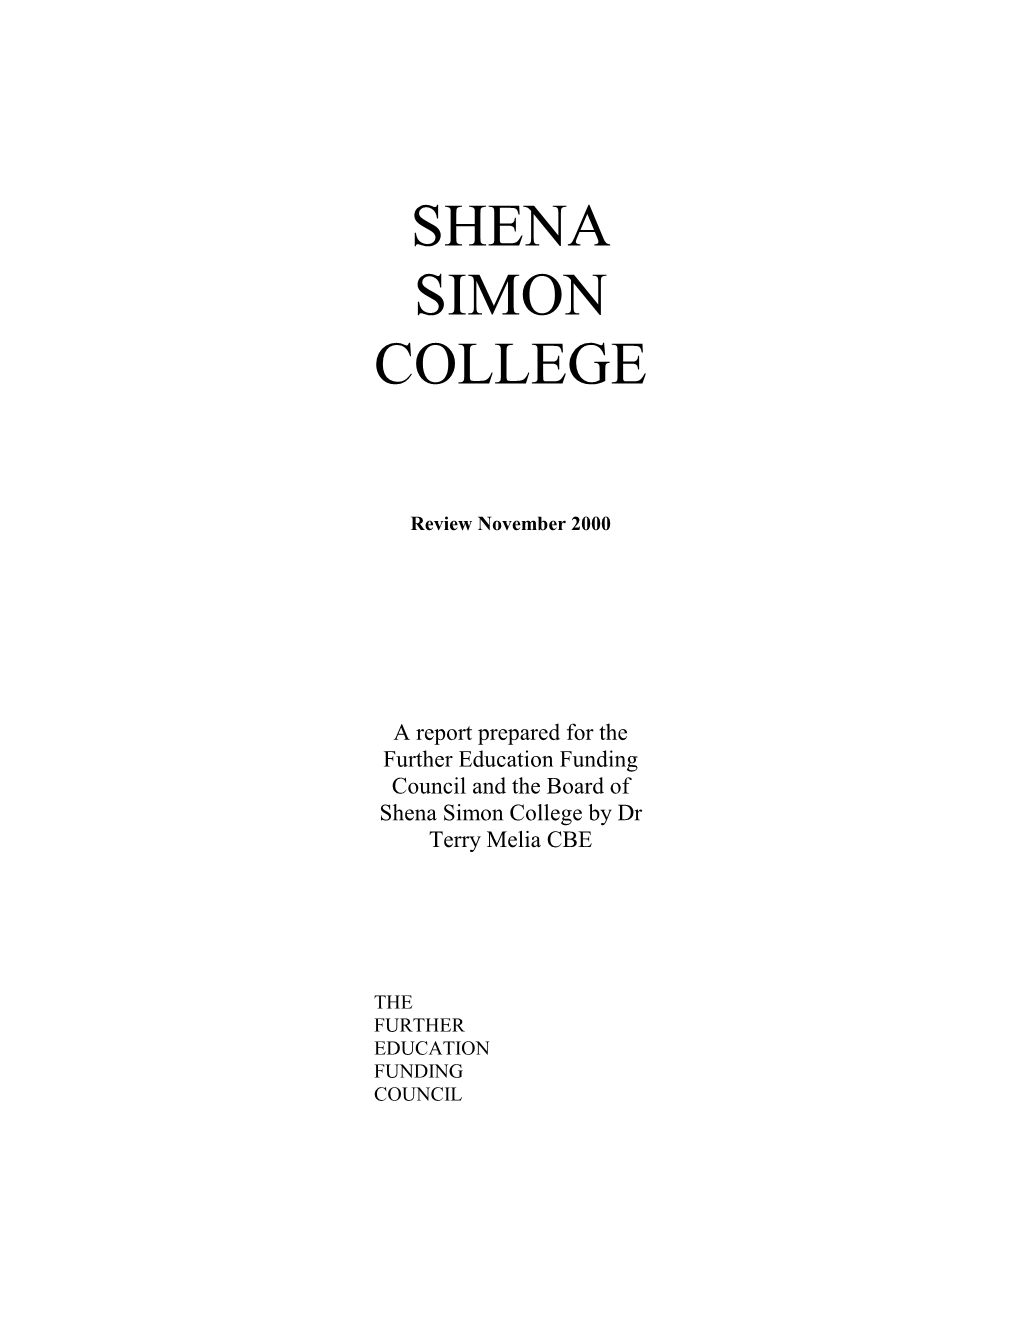 SHENA SIMON COLLEGE Review November 2000